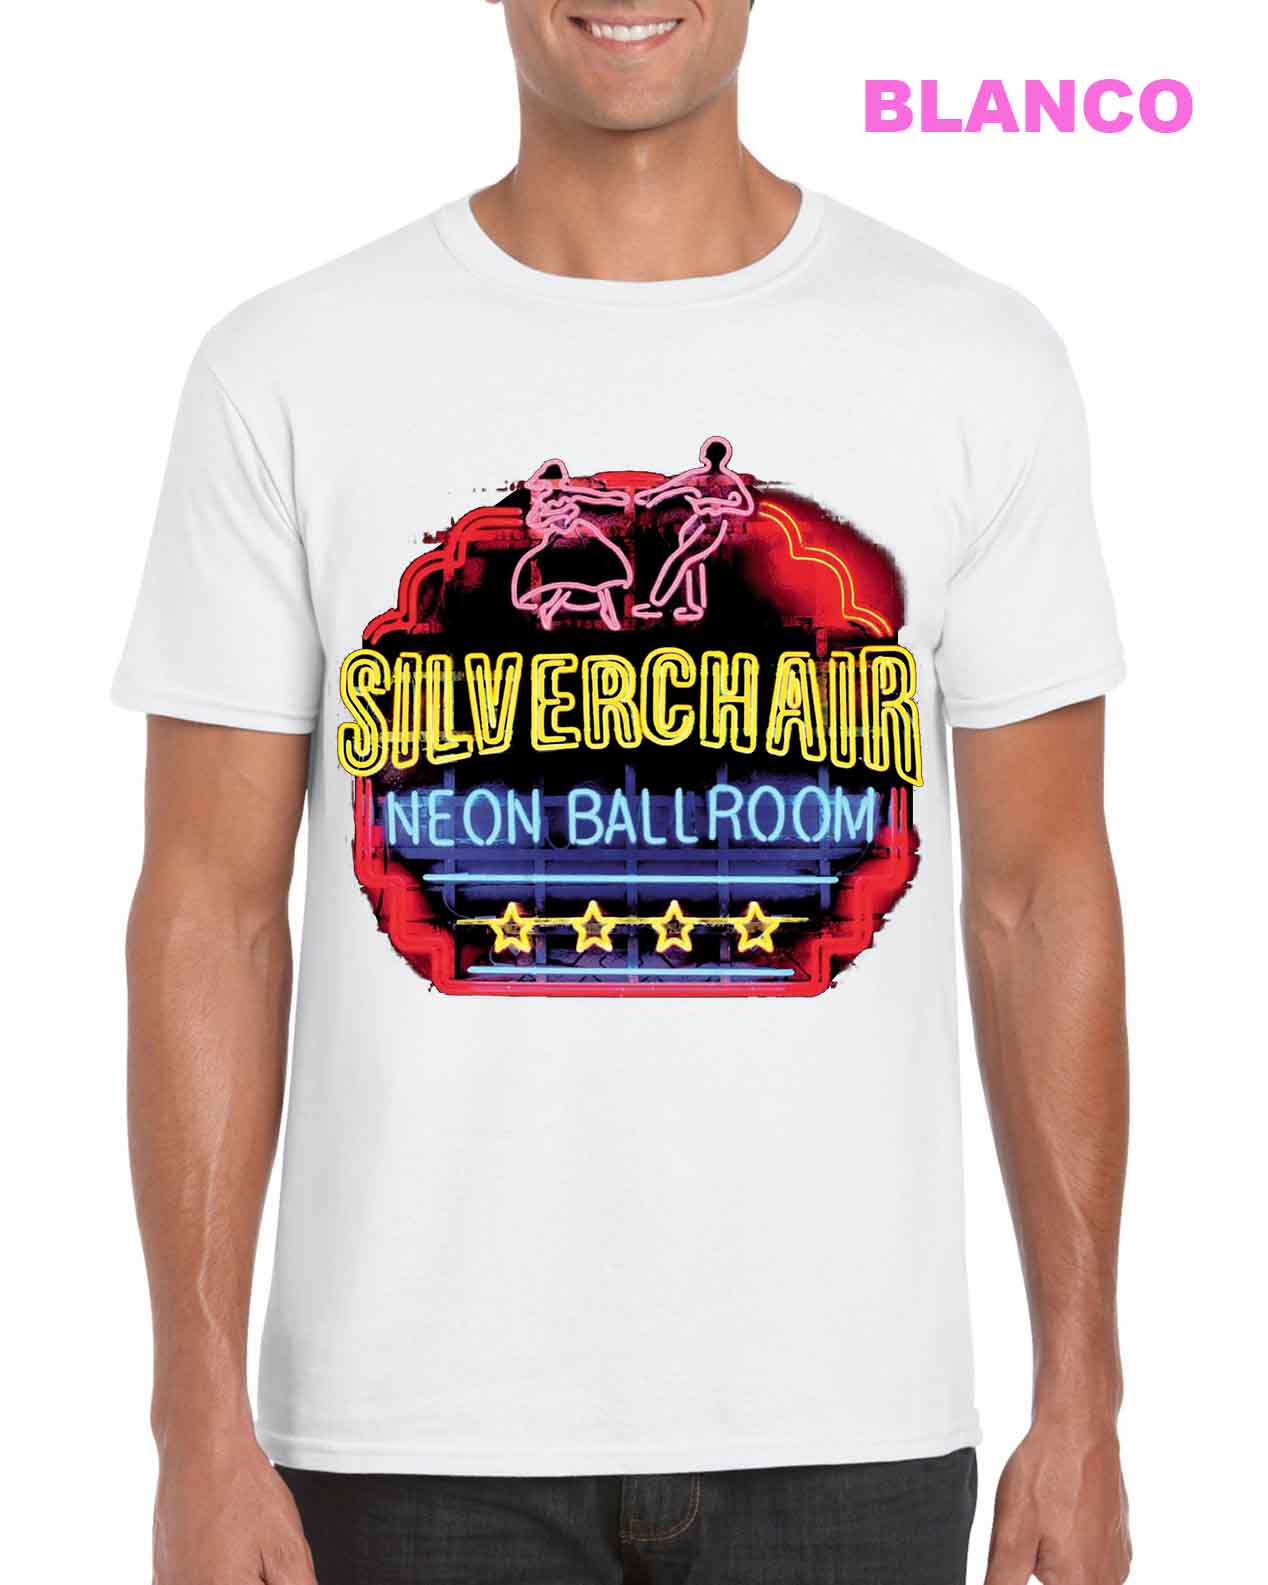 Silverchair - Neon Ball Room